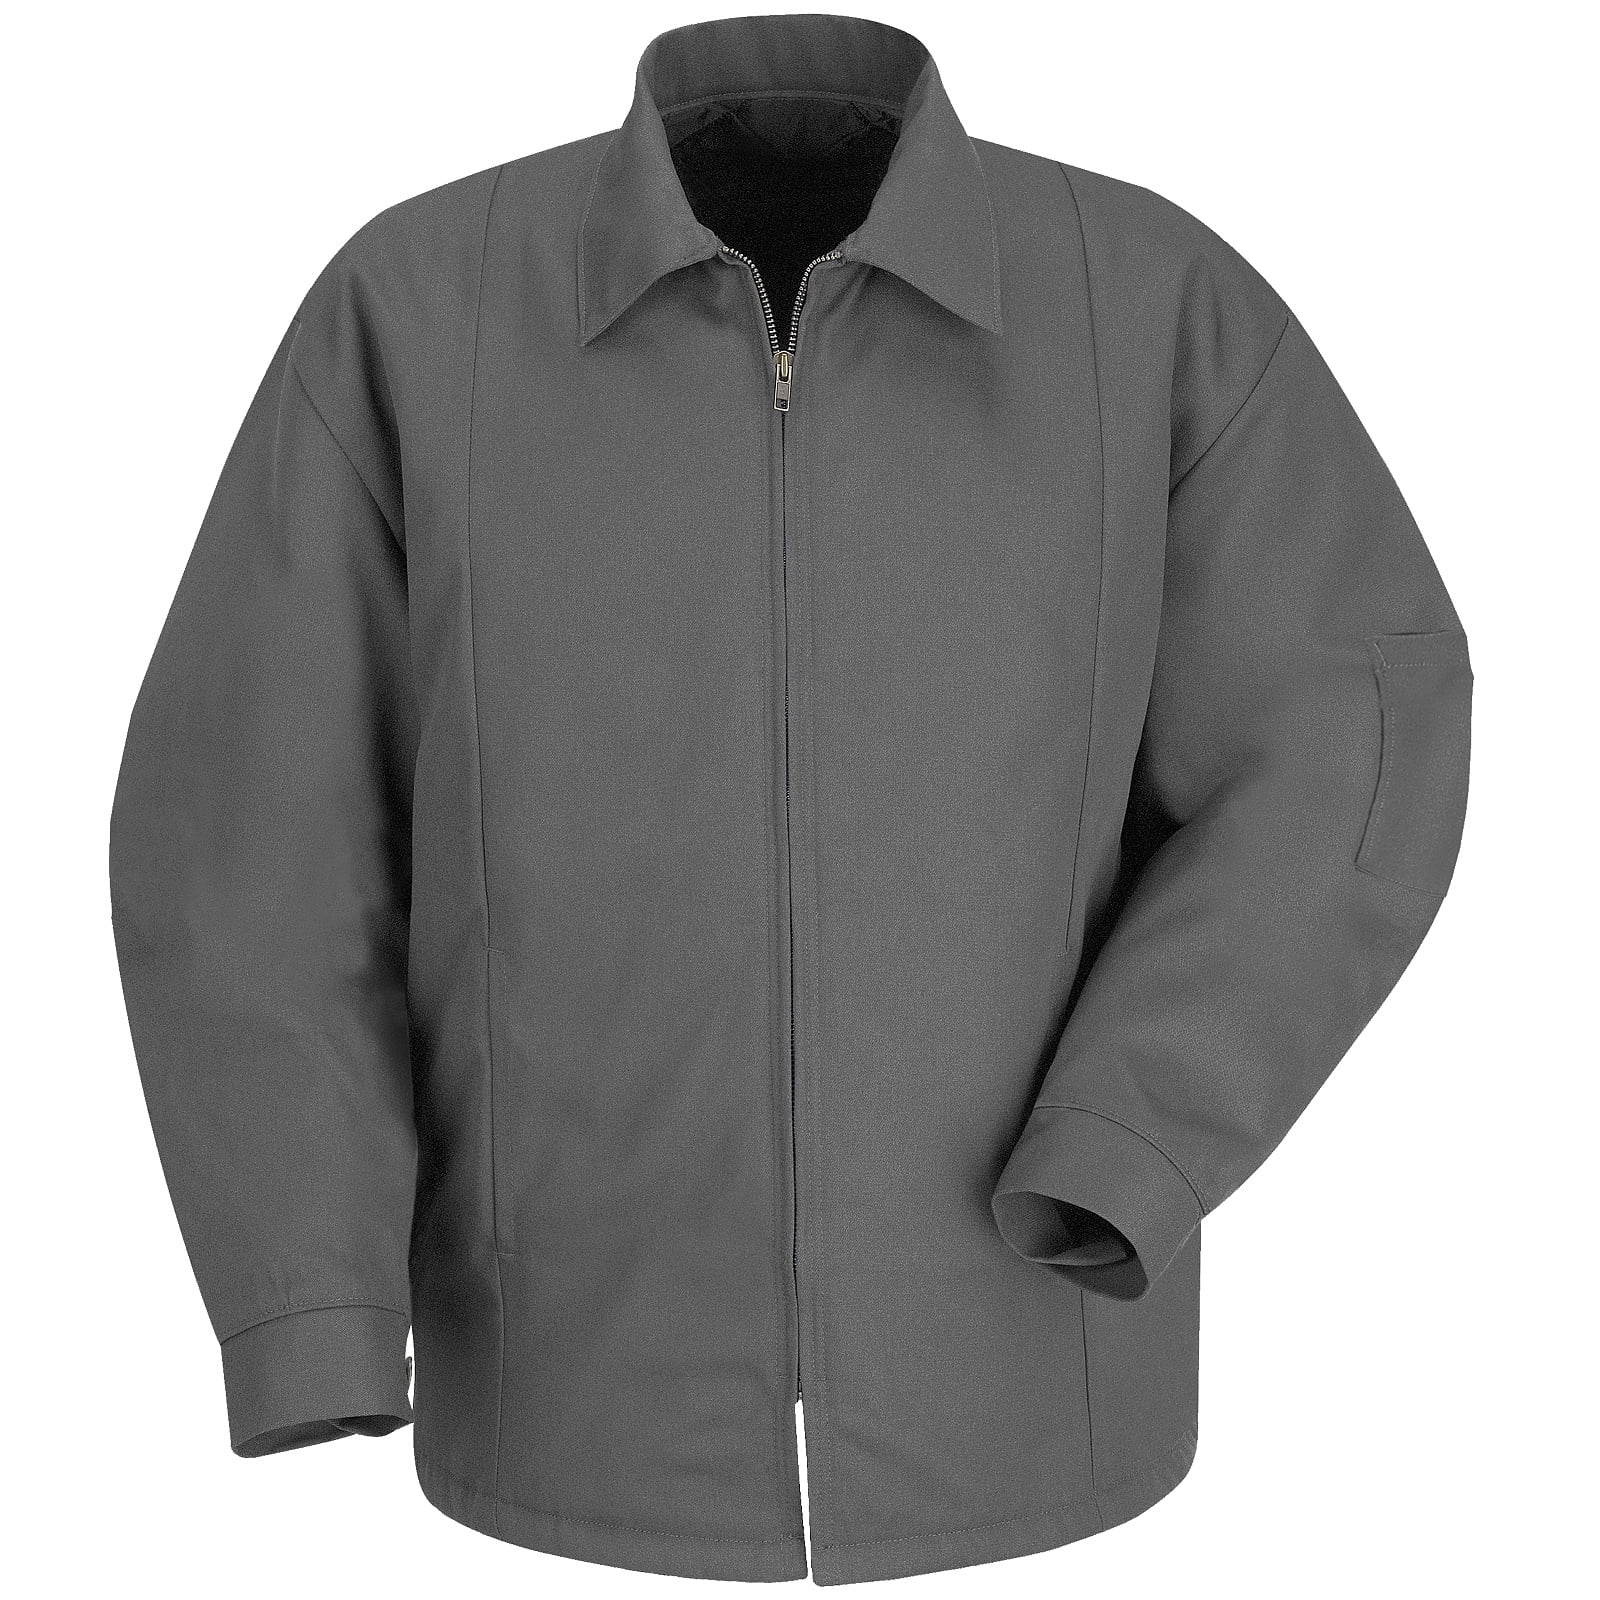 Goodyear Work Jacket Waterproof Winter Canvas Warm Lined Mens Industrial Coats 